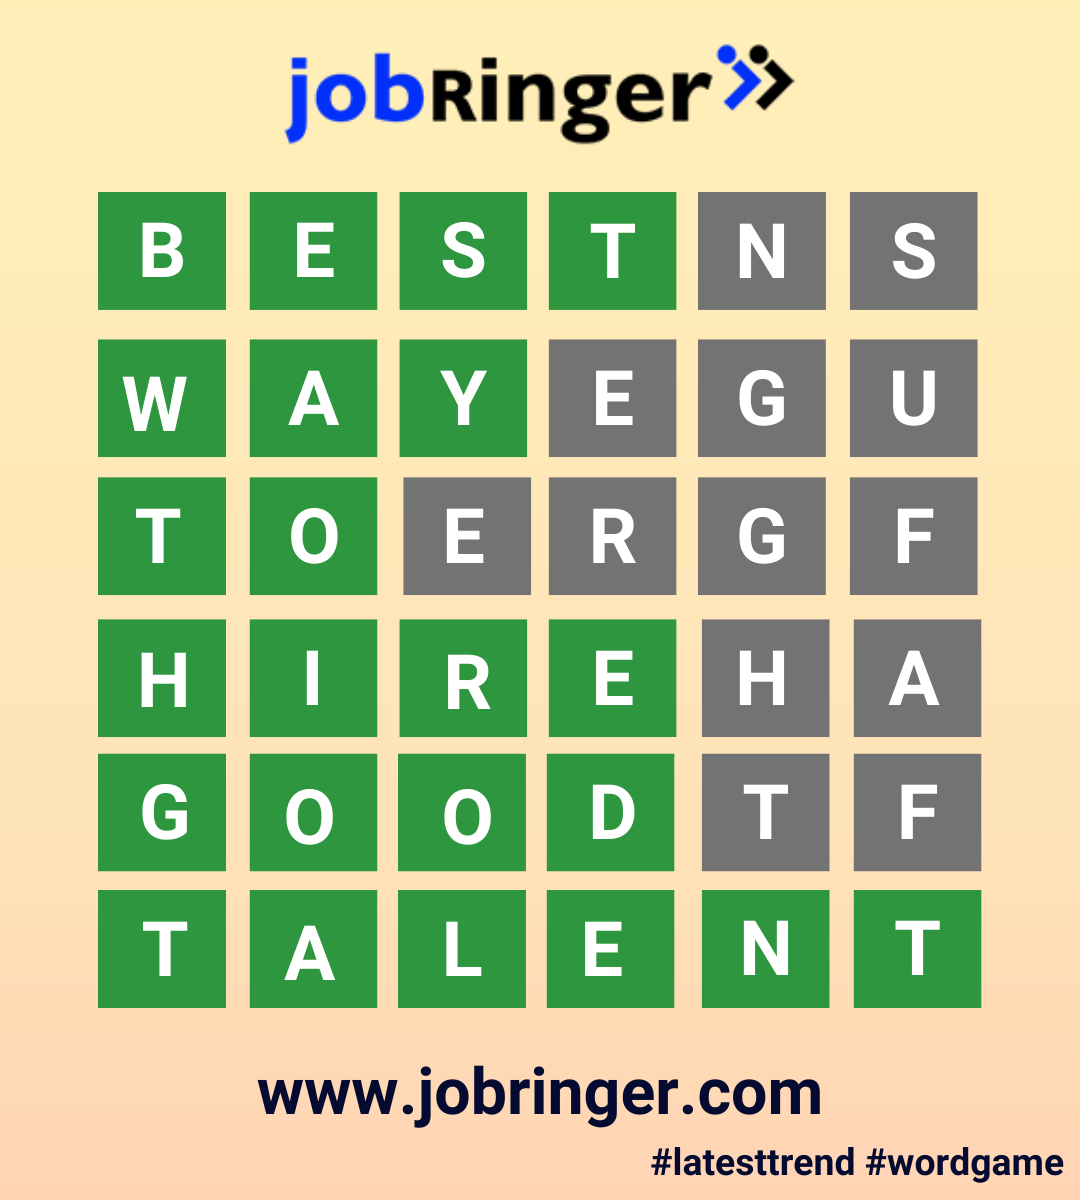 jobringer.com . . . #hiring #employer #startup #hr #recruitment #talentacquisition #talenthunt #sourcing #resume #resumedatabase #free #lowcost #jobposting #india #resumebuilding #jobseekers #jobportal #unlimitedposting #jobringer #resumesearch #candidates